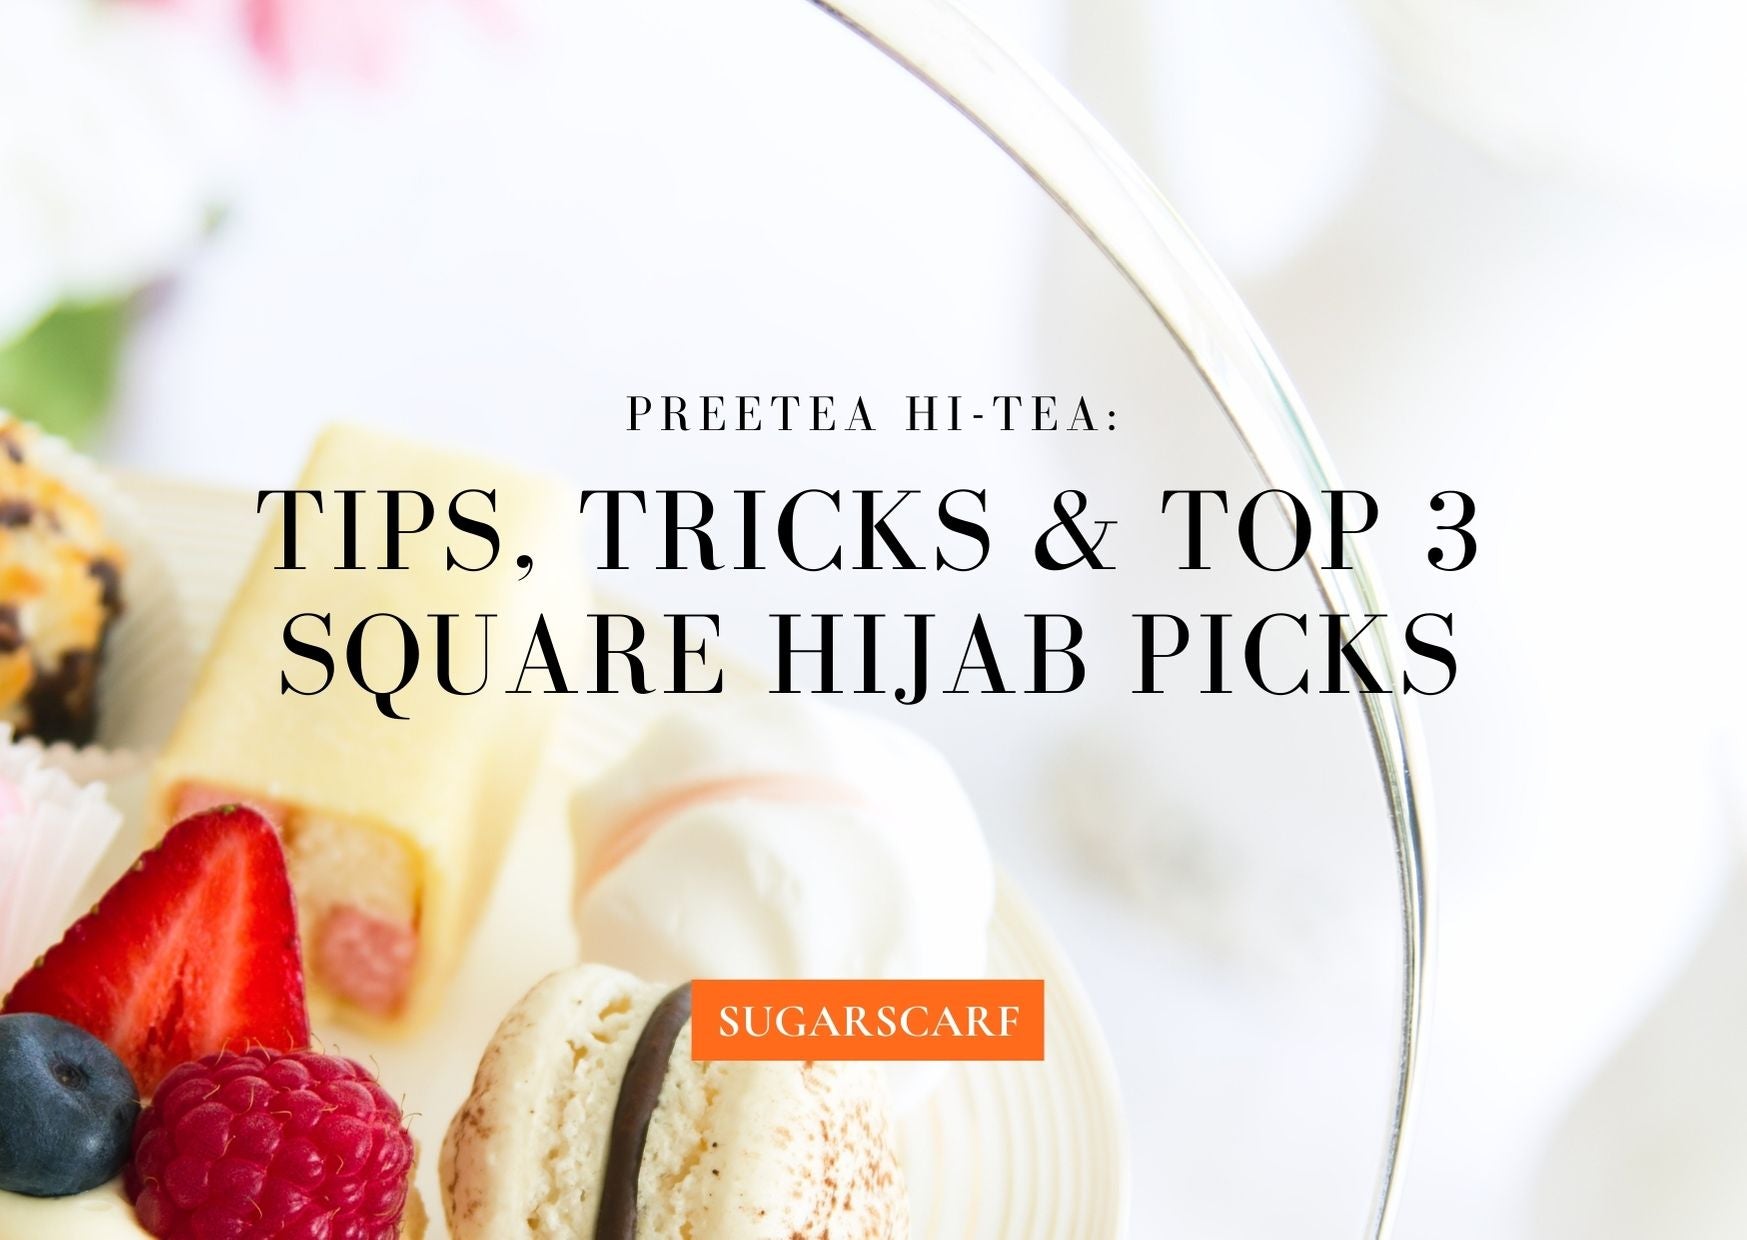 Preetea Hi-tea: Tips, Tricks & Top 3 Square Hijab Picks